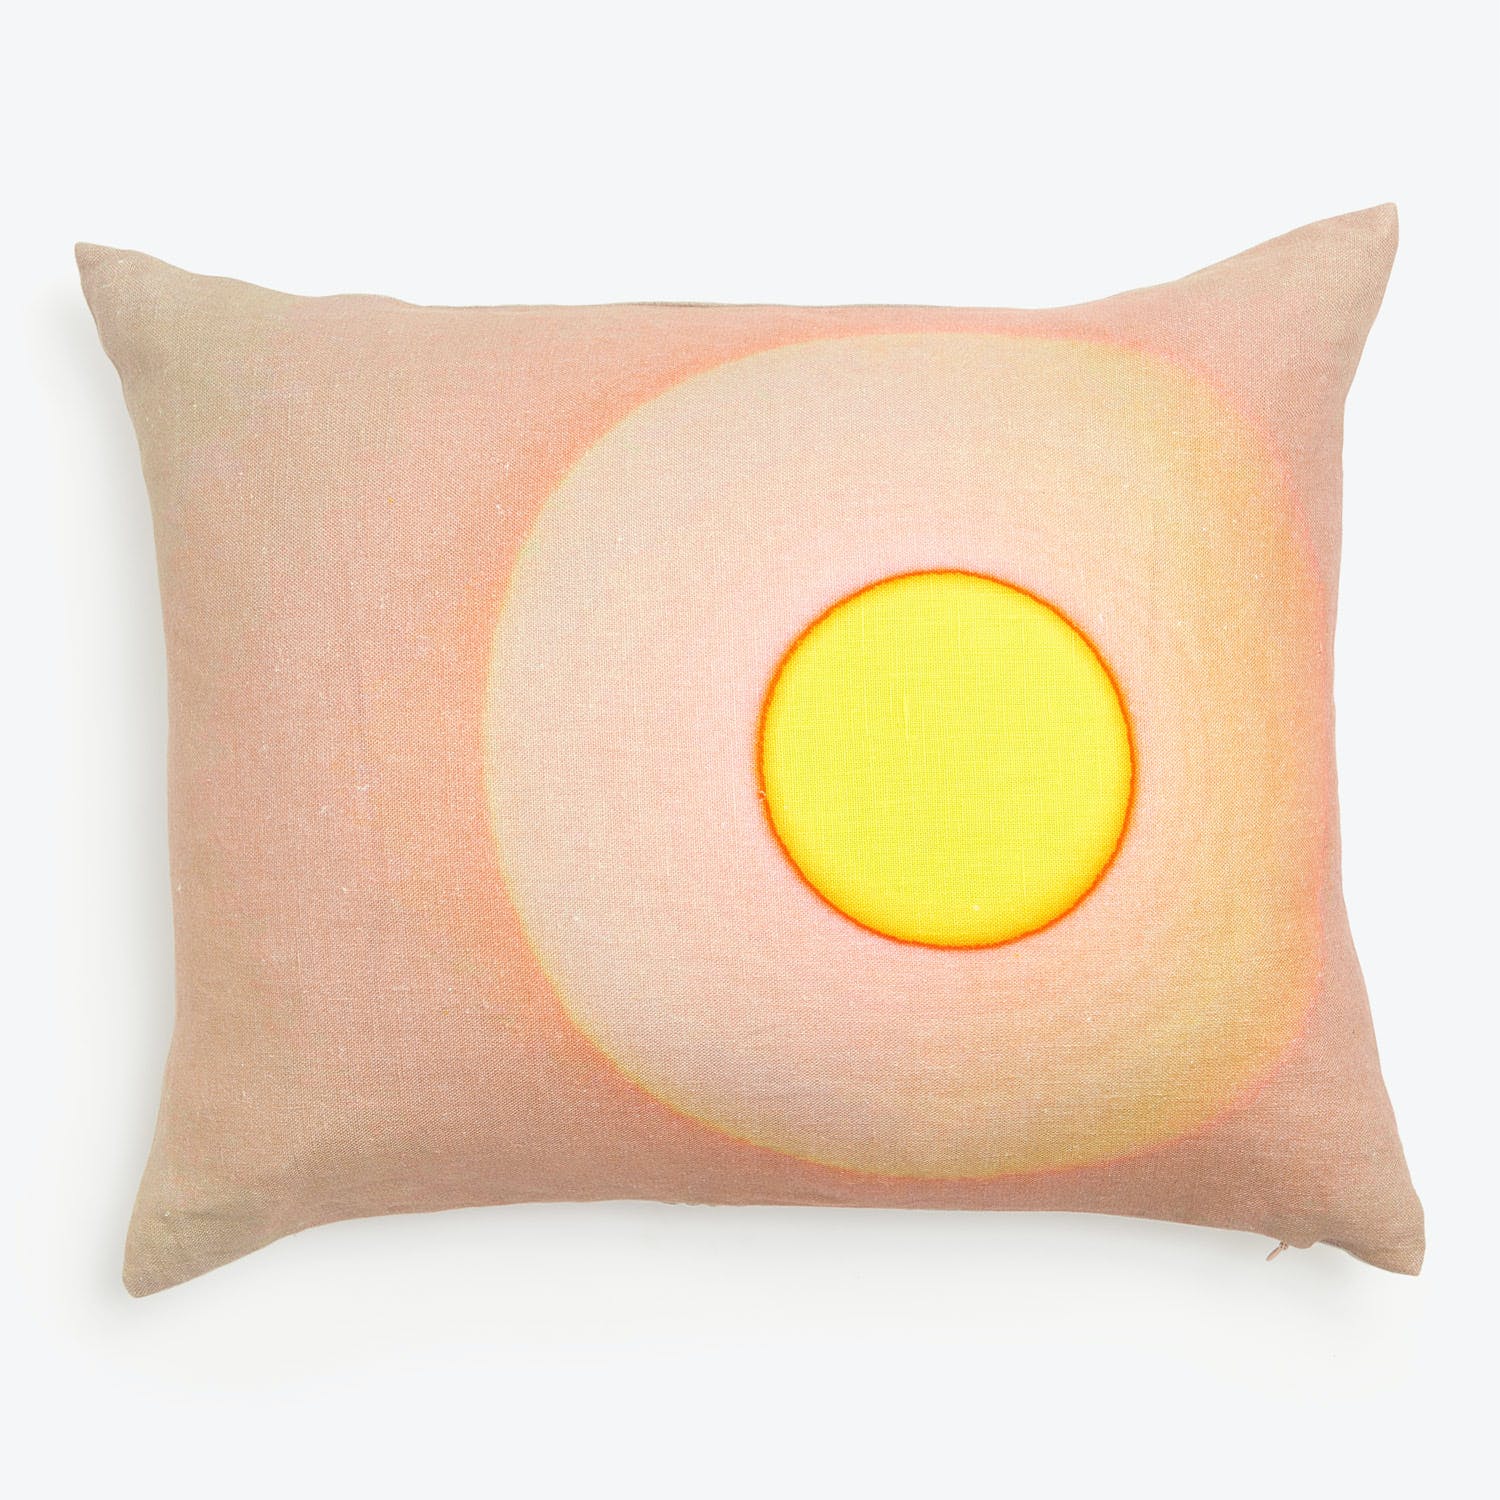 Rectangular pillow with fried egg design on light beige fabric.